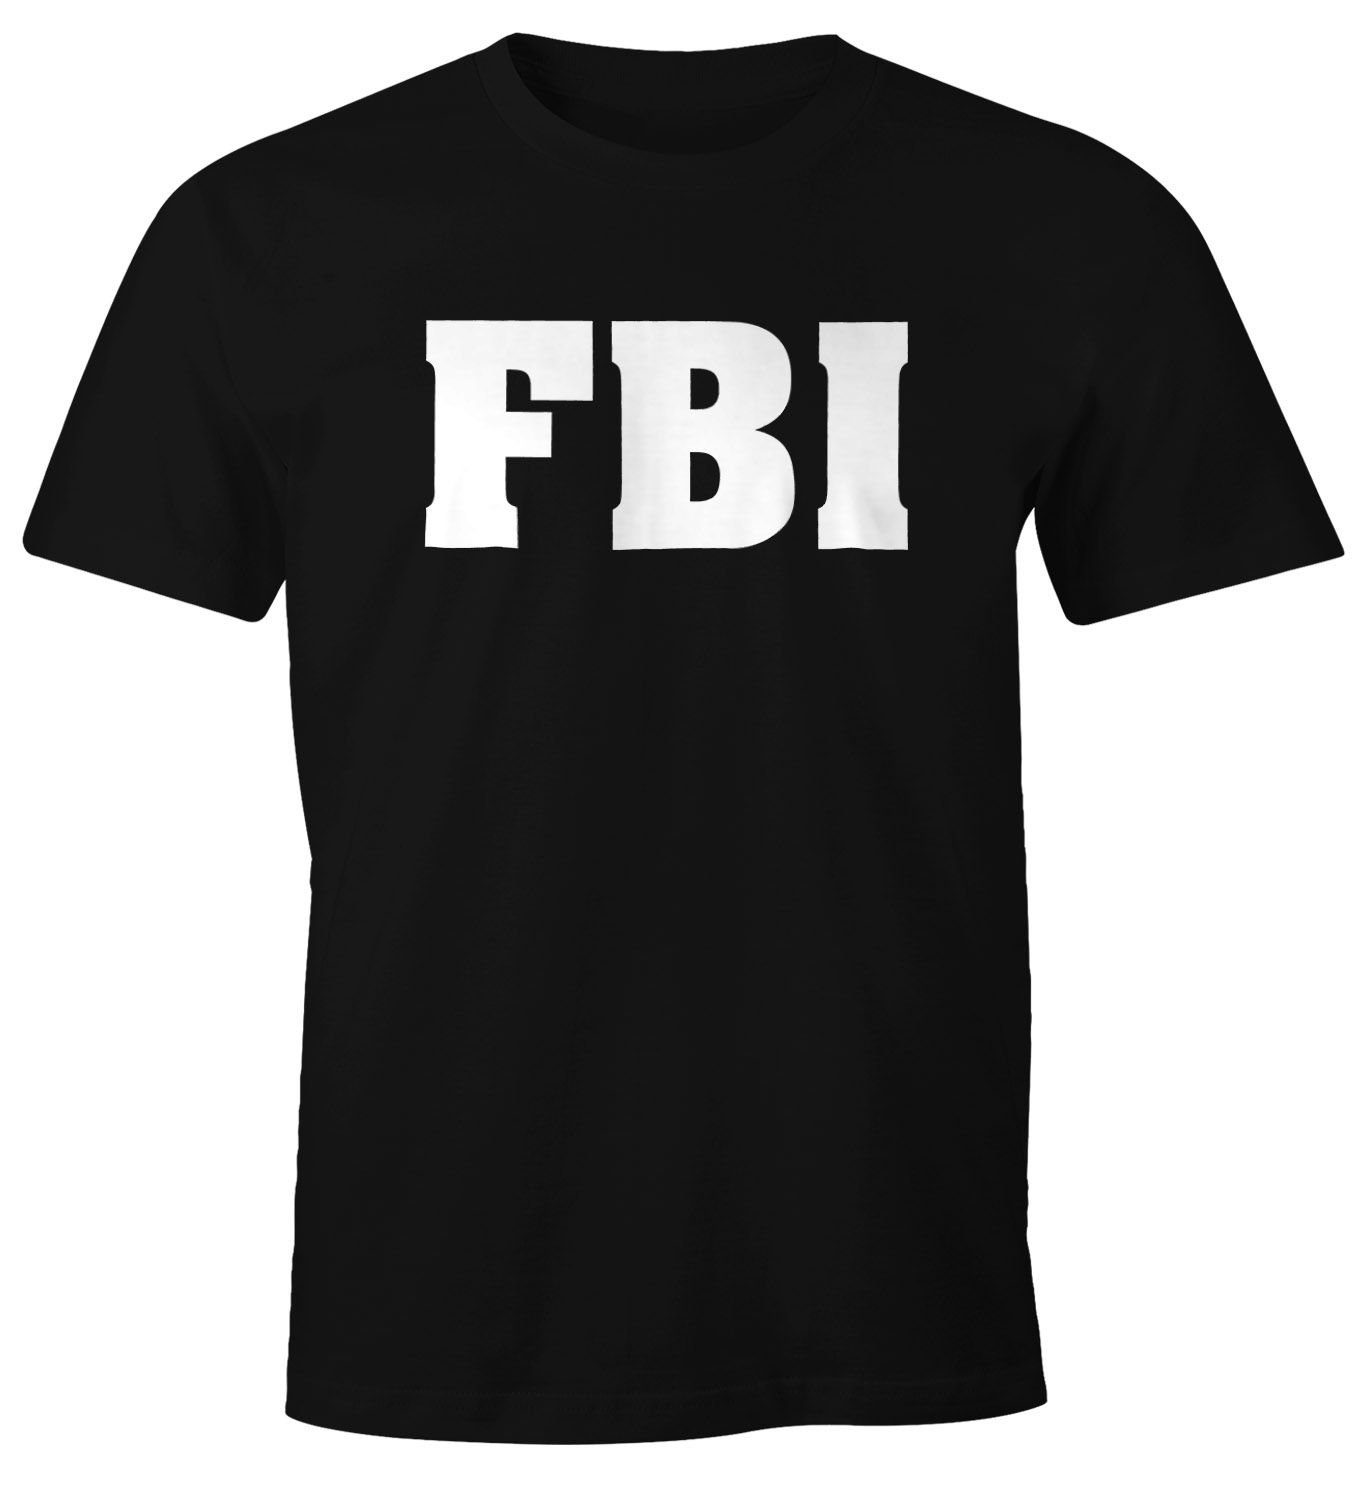 MoonWorks Print-Shirt Moonworks® Kostüm T-Shirt mit Herren Karneval Verkleidung FBI Print Faschings-Shirt Aufdruck Fun-Shirt